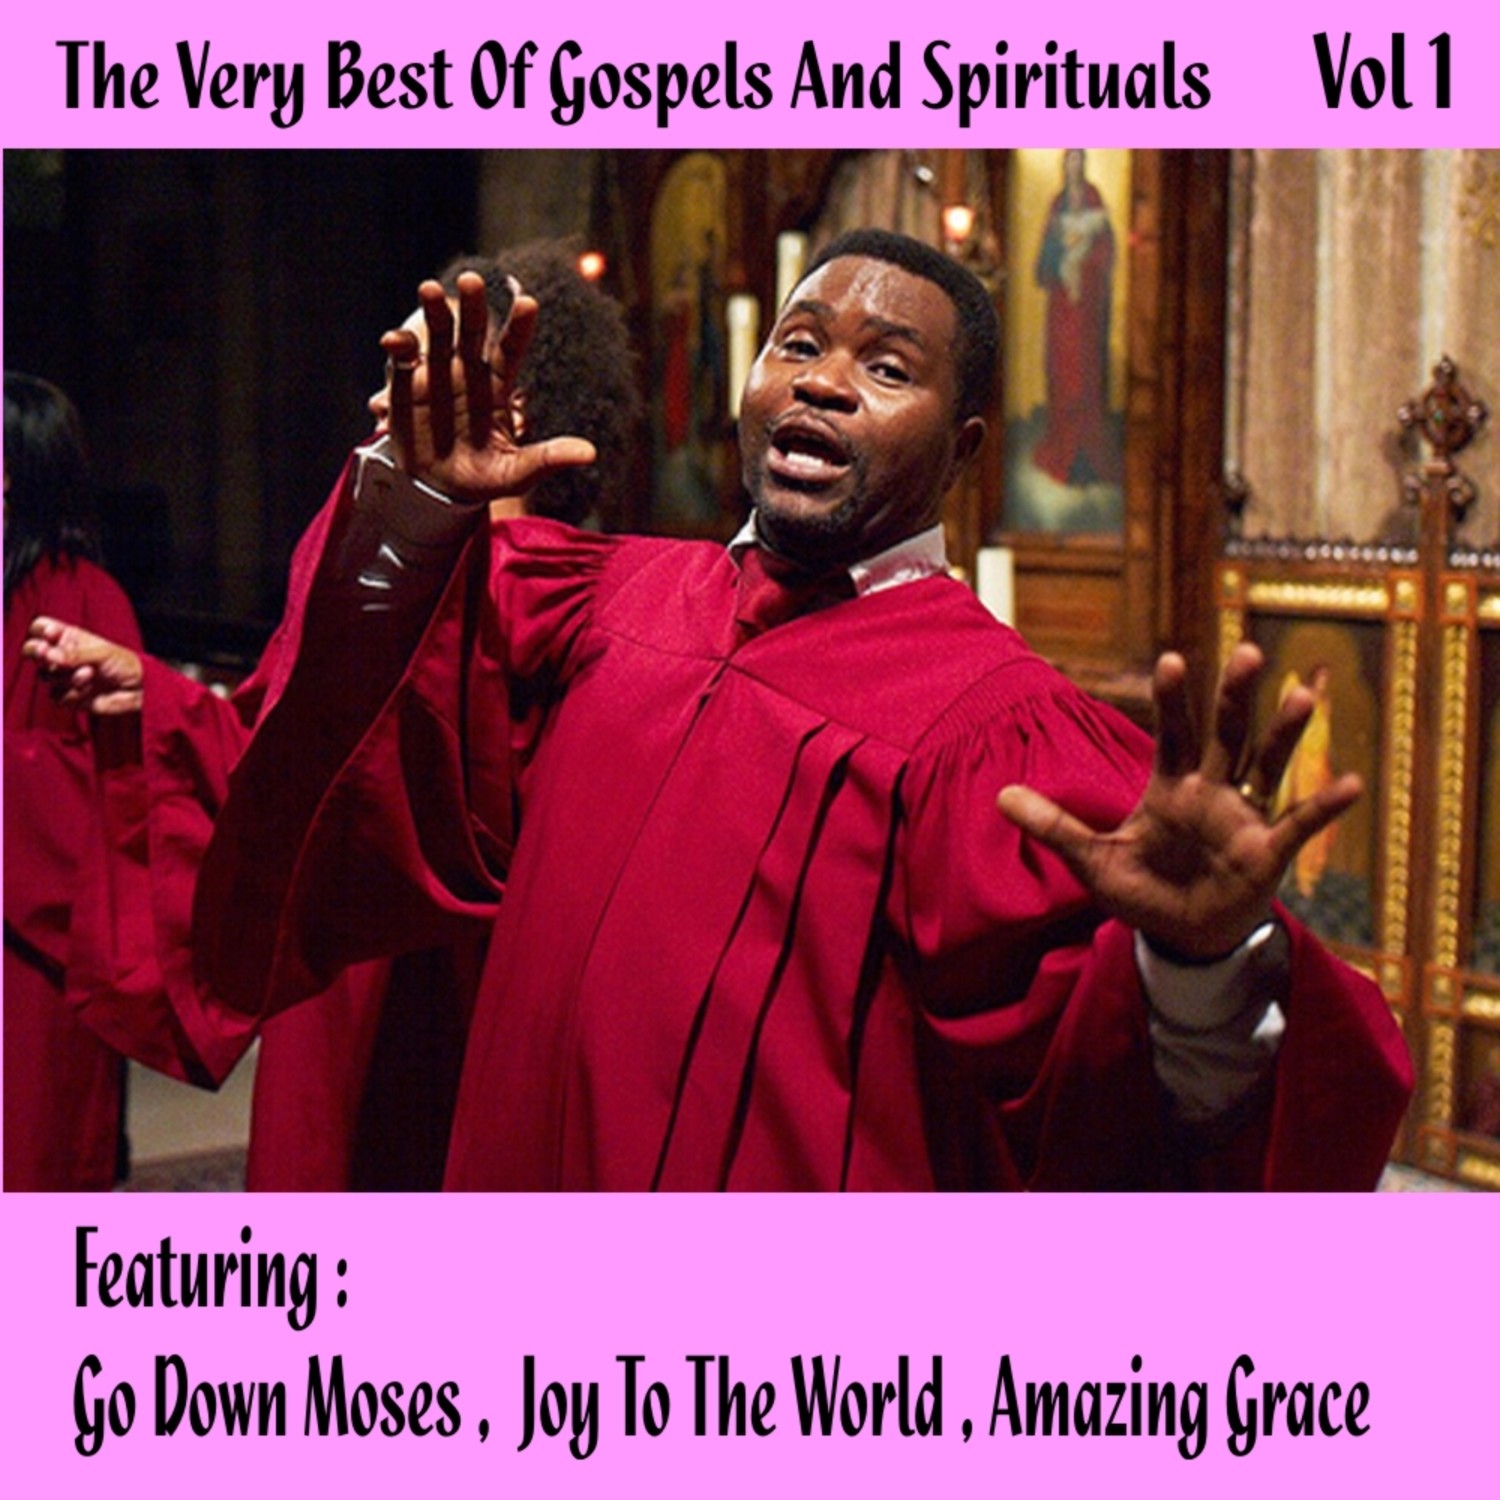 The Very Best Of Gospels And Spirituals Vol 1